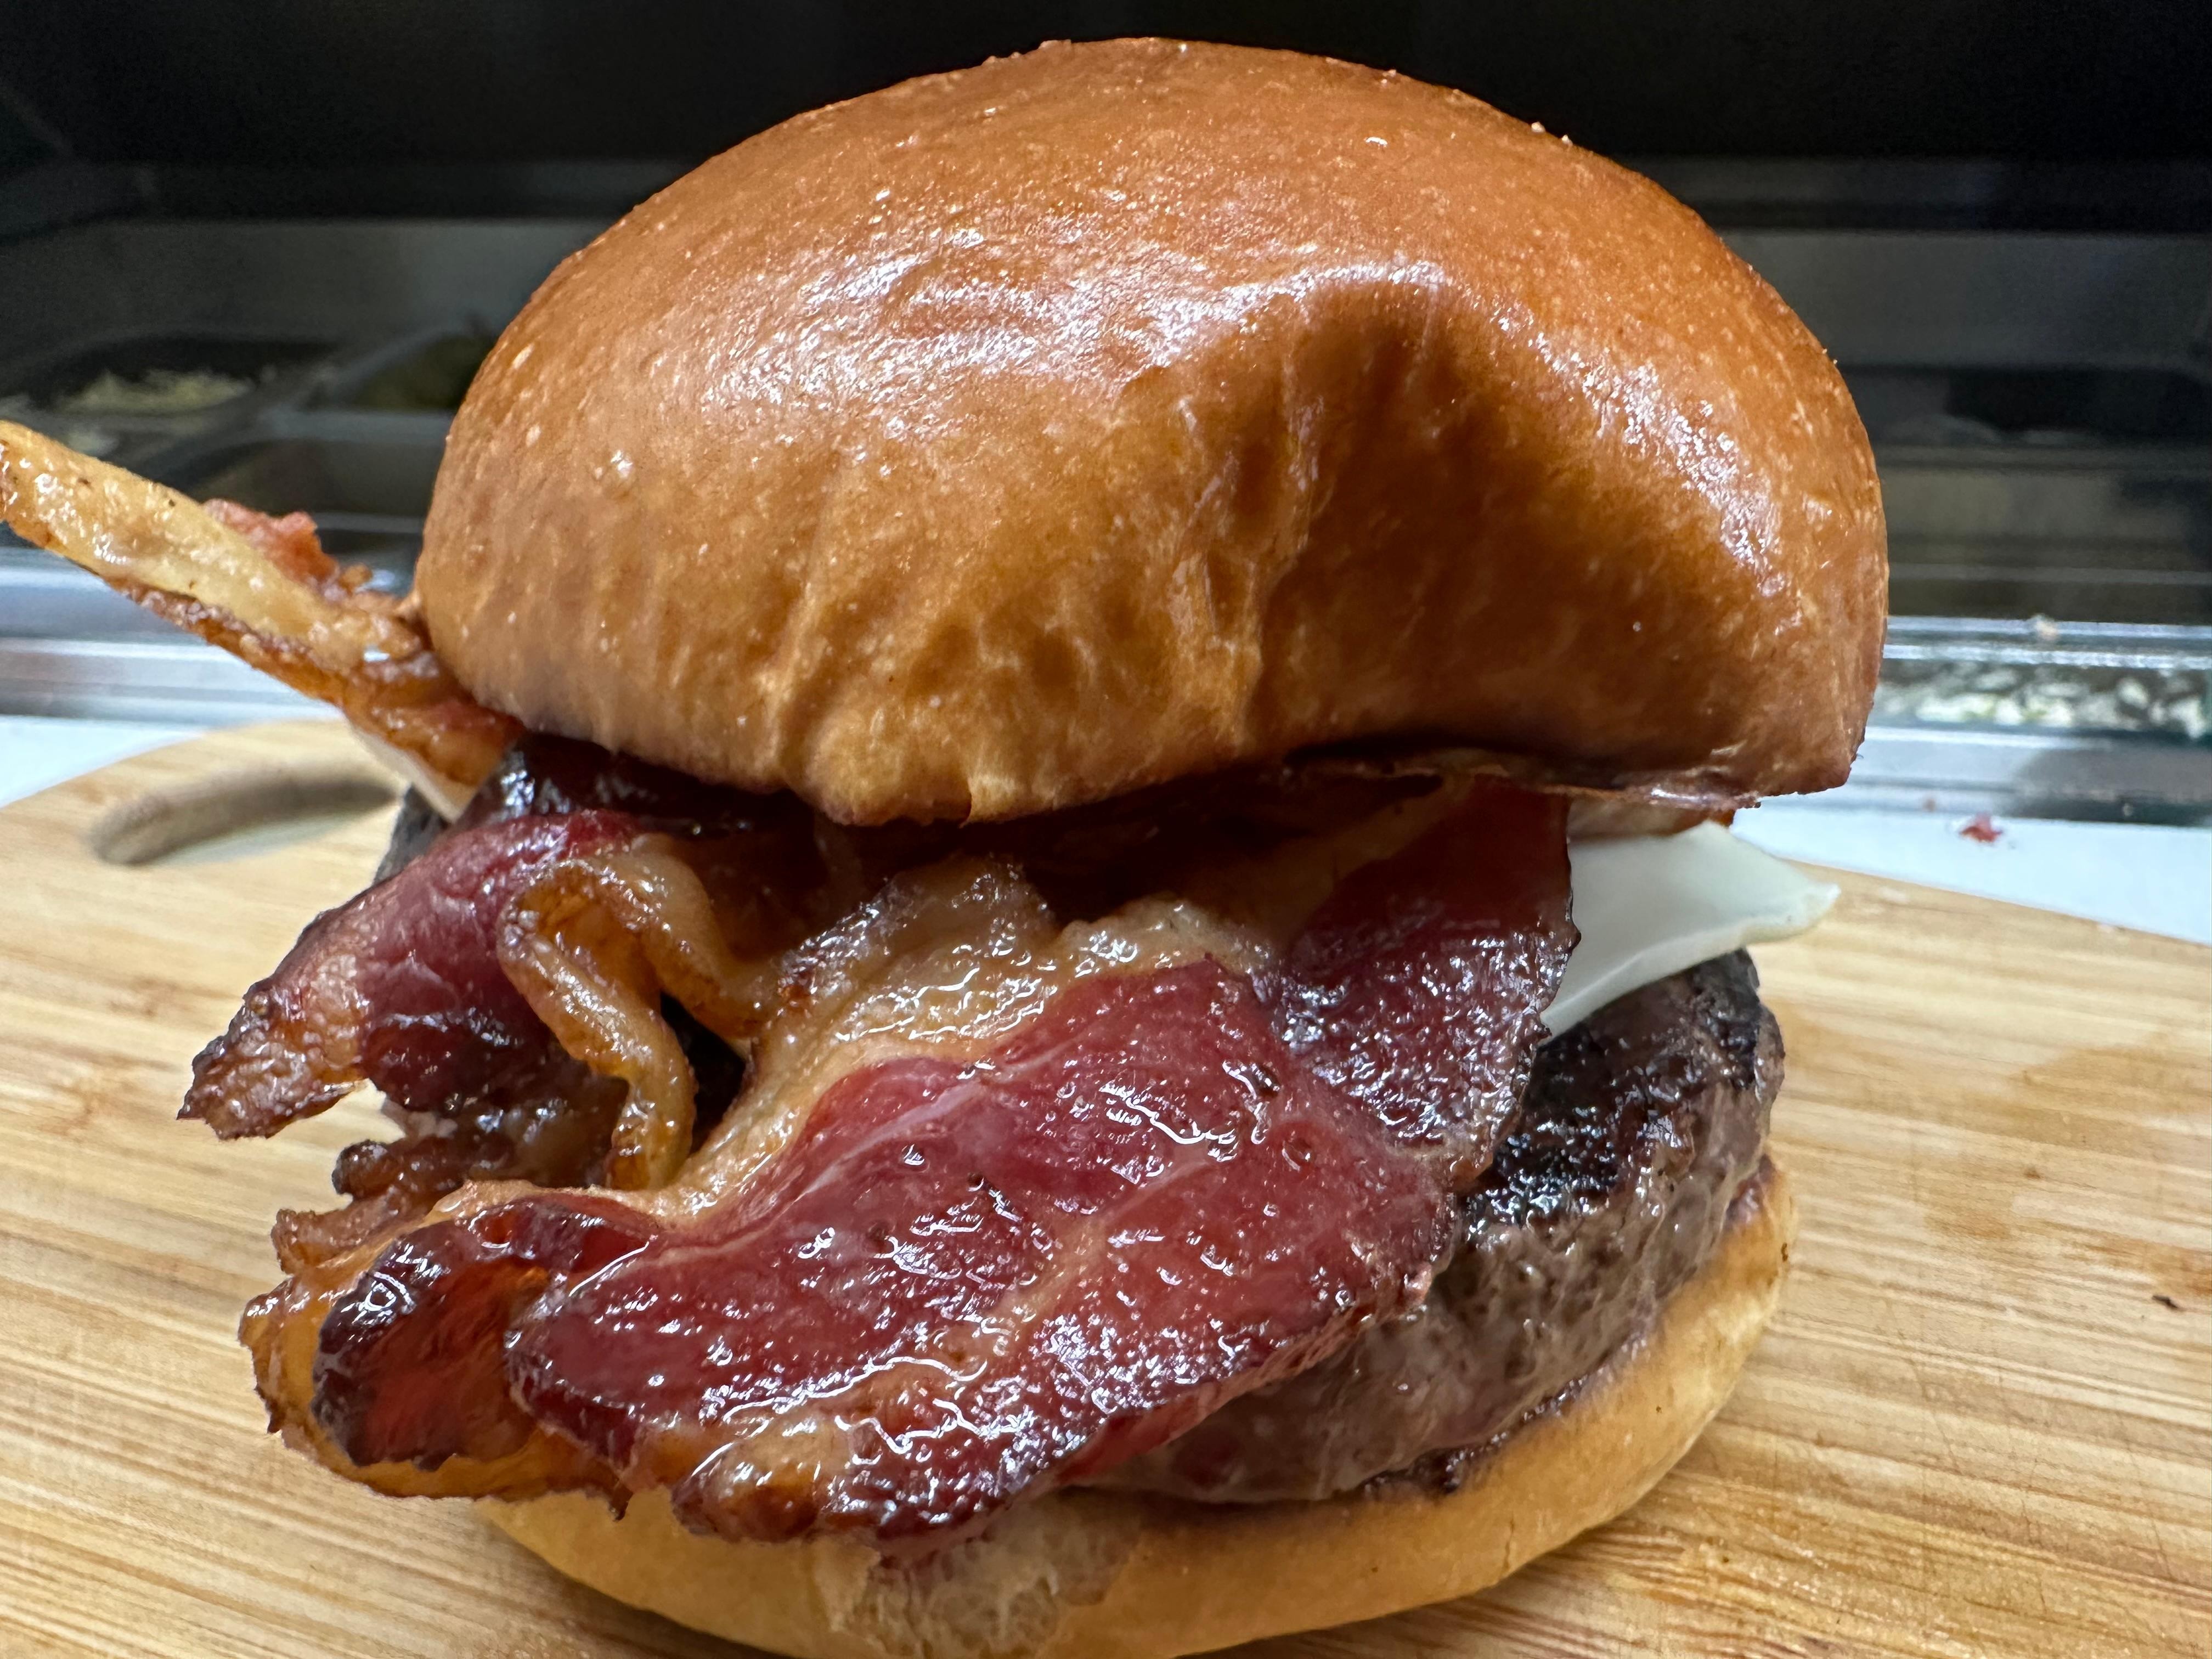 BACON LIFE W/FRIES (burger, american cheese & 3 strips of bacon on brioche bun)